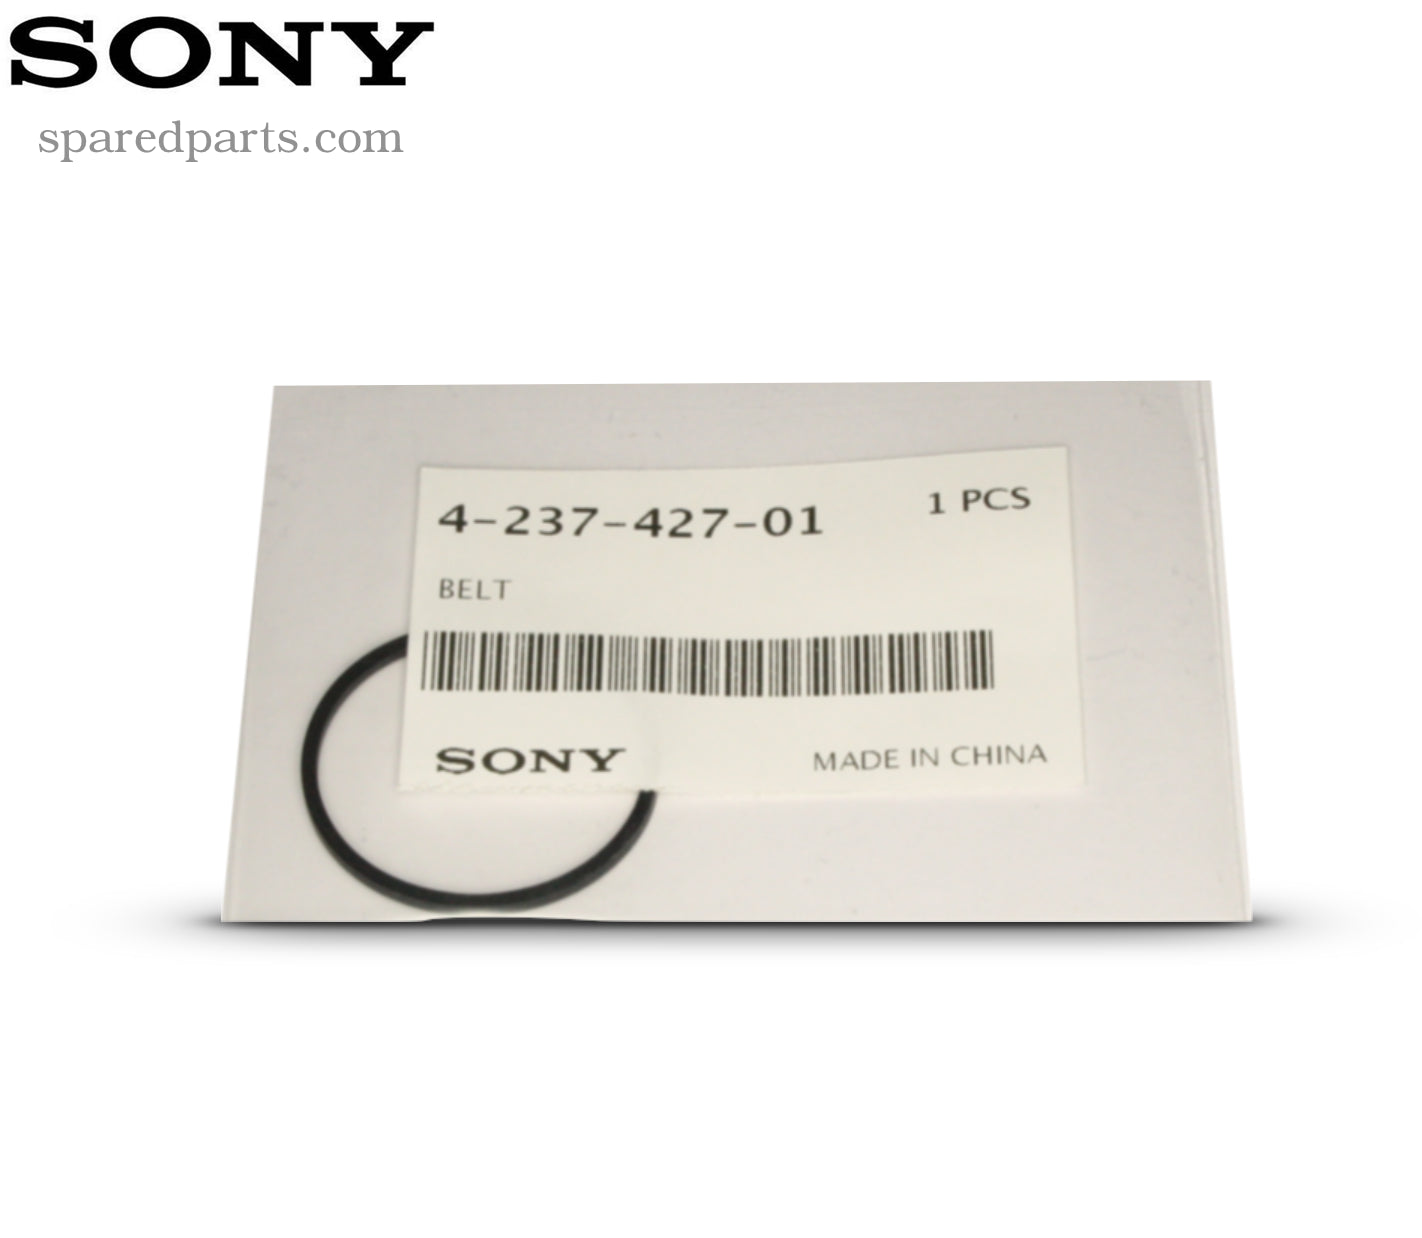 Sony BELT (CDM71), 423742701 4-237-427-01